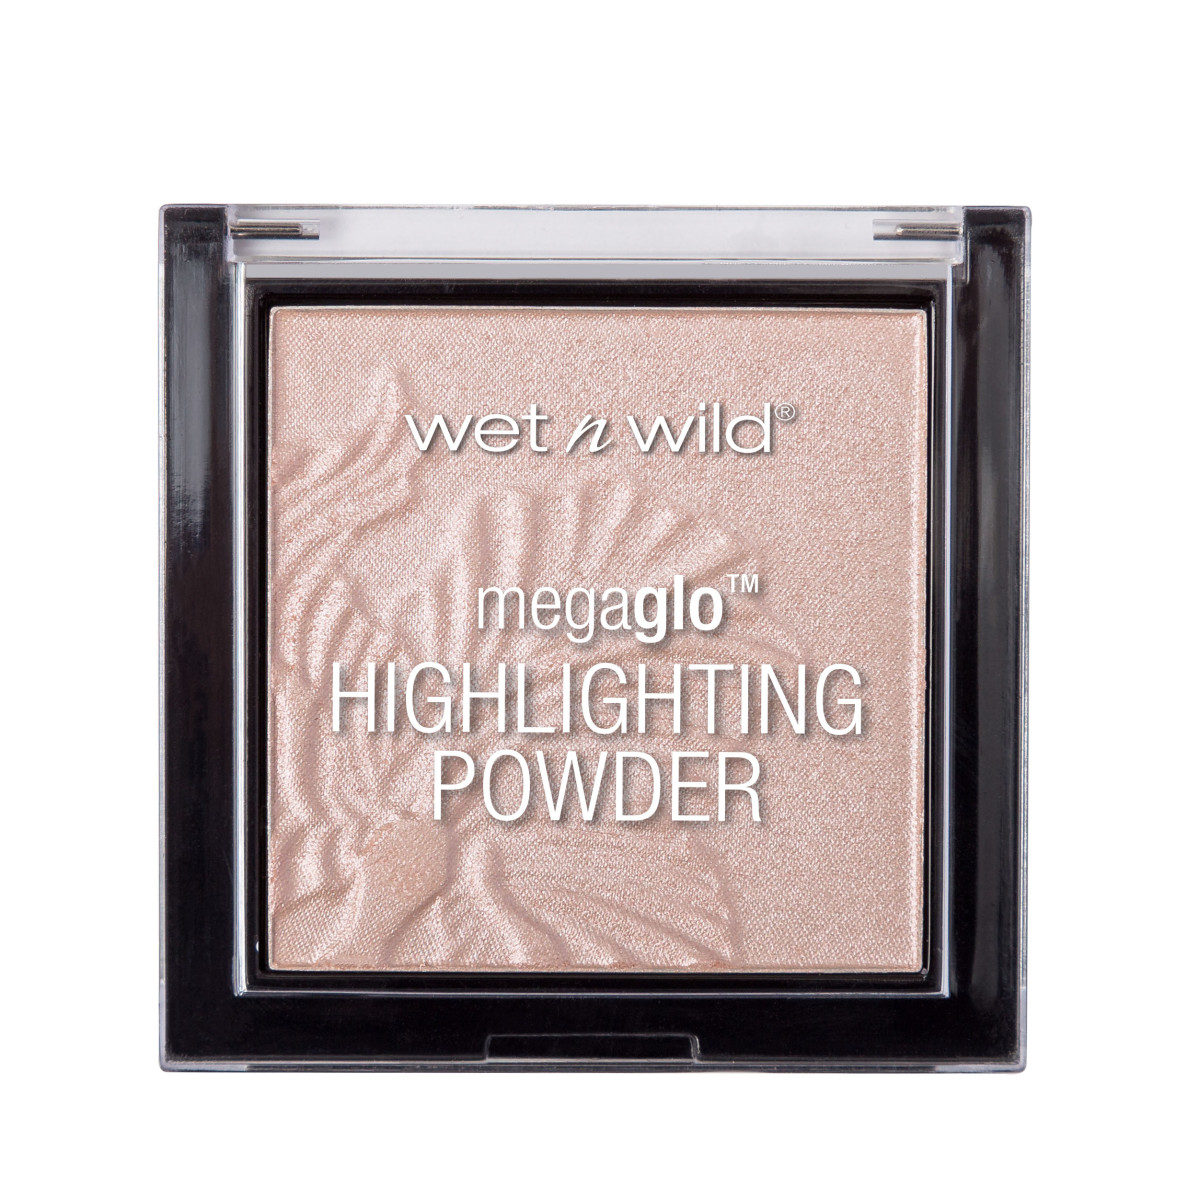 wet n wild MegaGlo Highlighting Powder | Cruelty